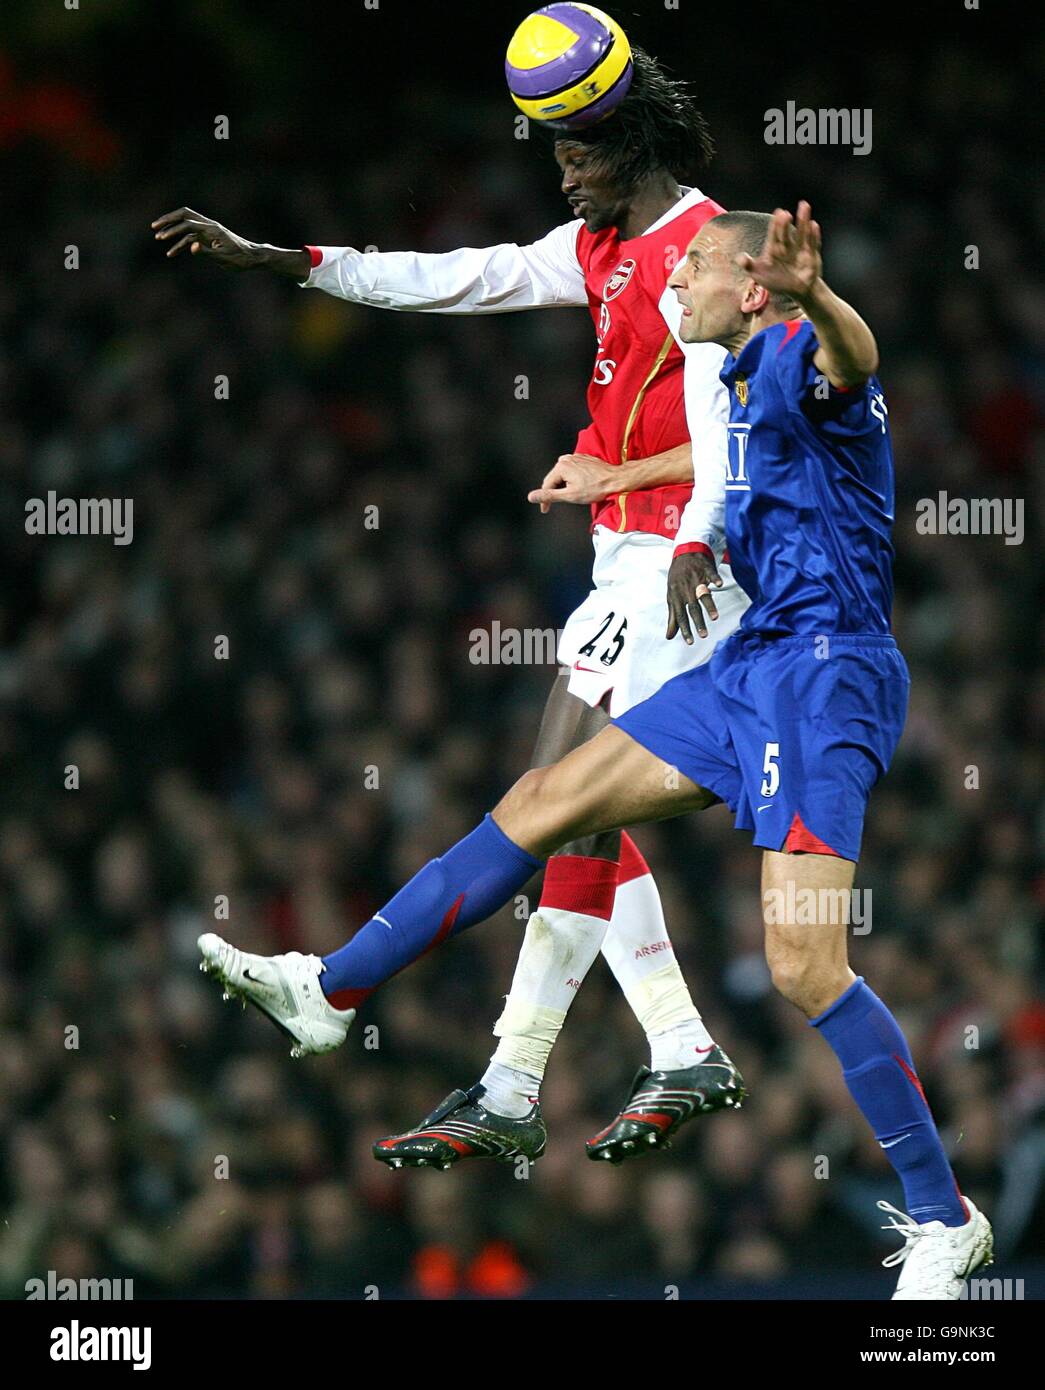 Soccer - FA Barclays Premiership - Arsenal v Manchester United - Emirates Stadium. Manchester United's Rio Ferdinand (r) and Arsenal's Emmanuel Adebayor (l) battle for the ball Stock Photo